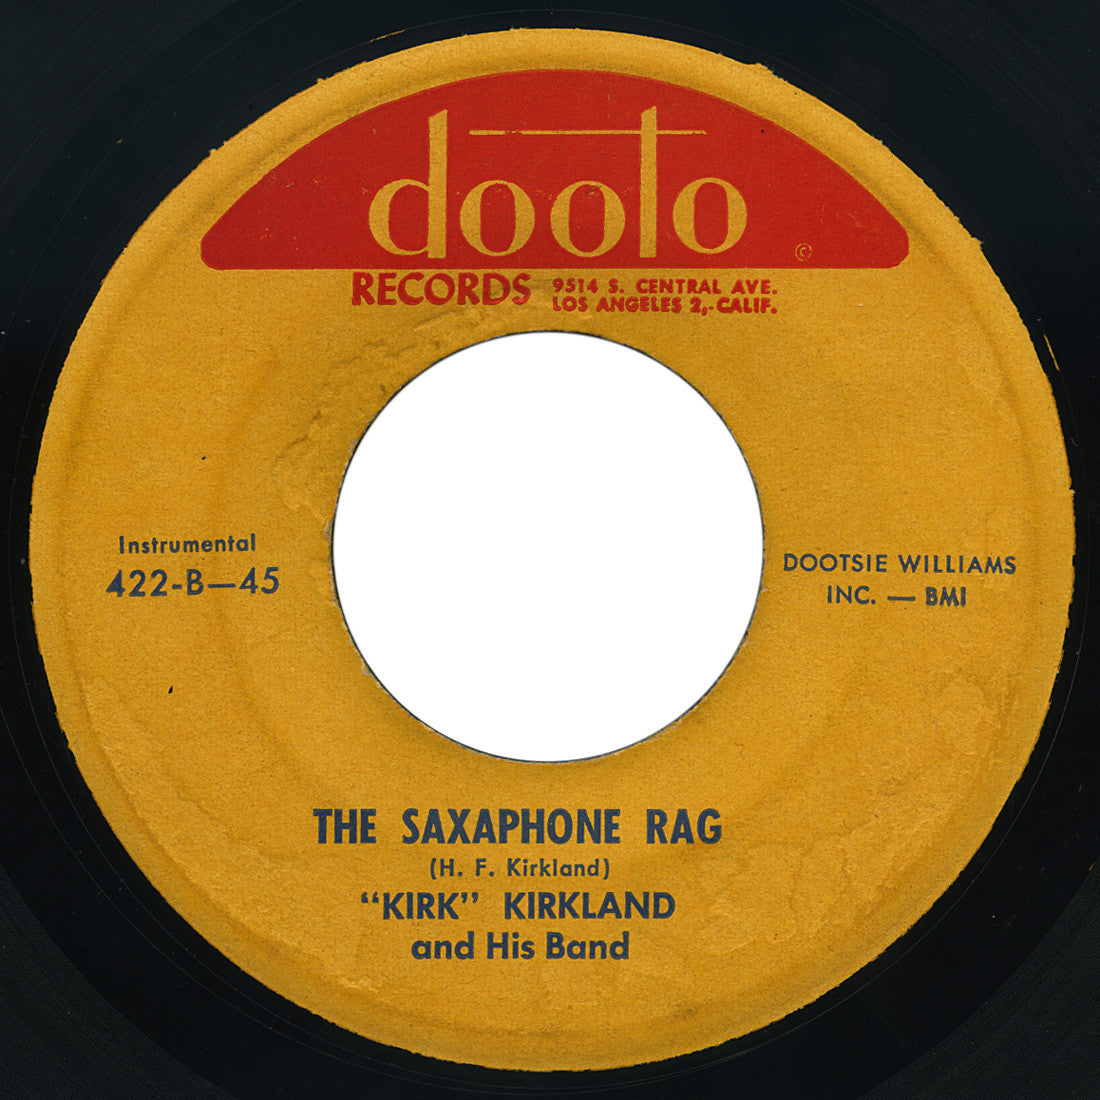 “Kirk” Kirkland – The Saxaphone Rag – Dooto